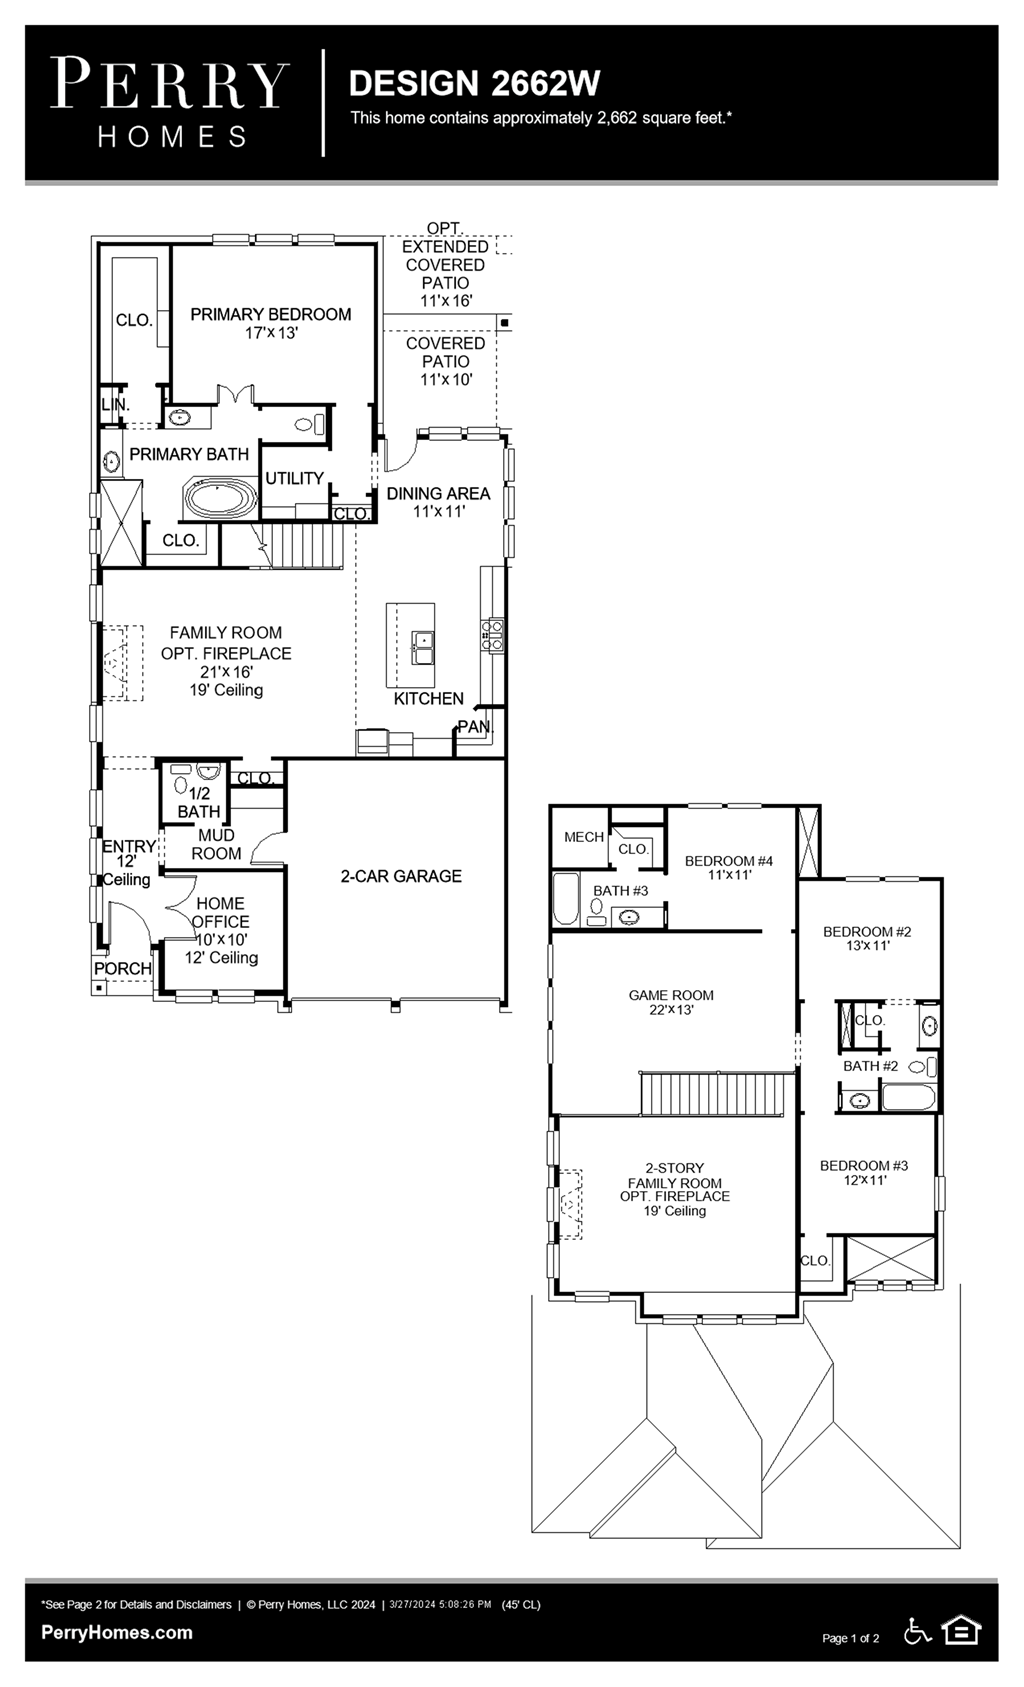 Floor Plan for 2662W